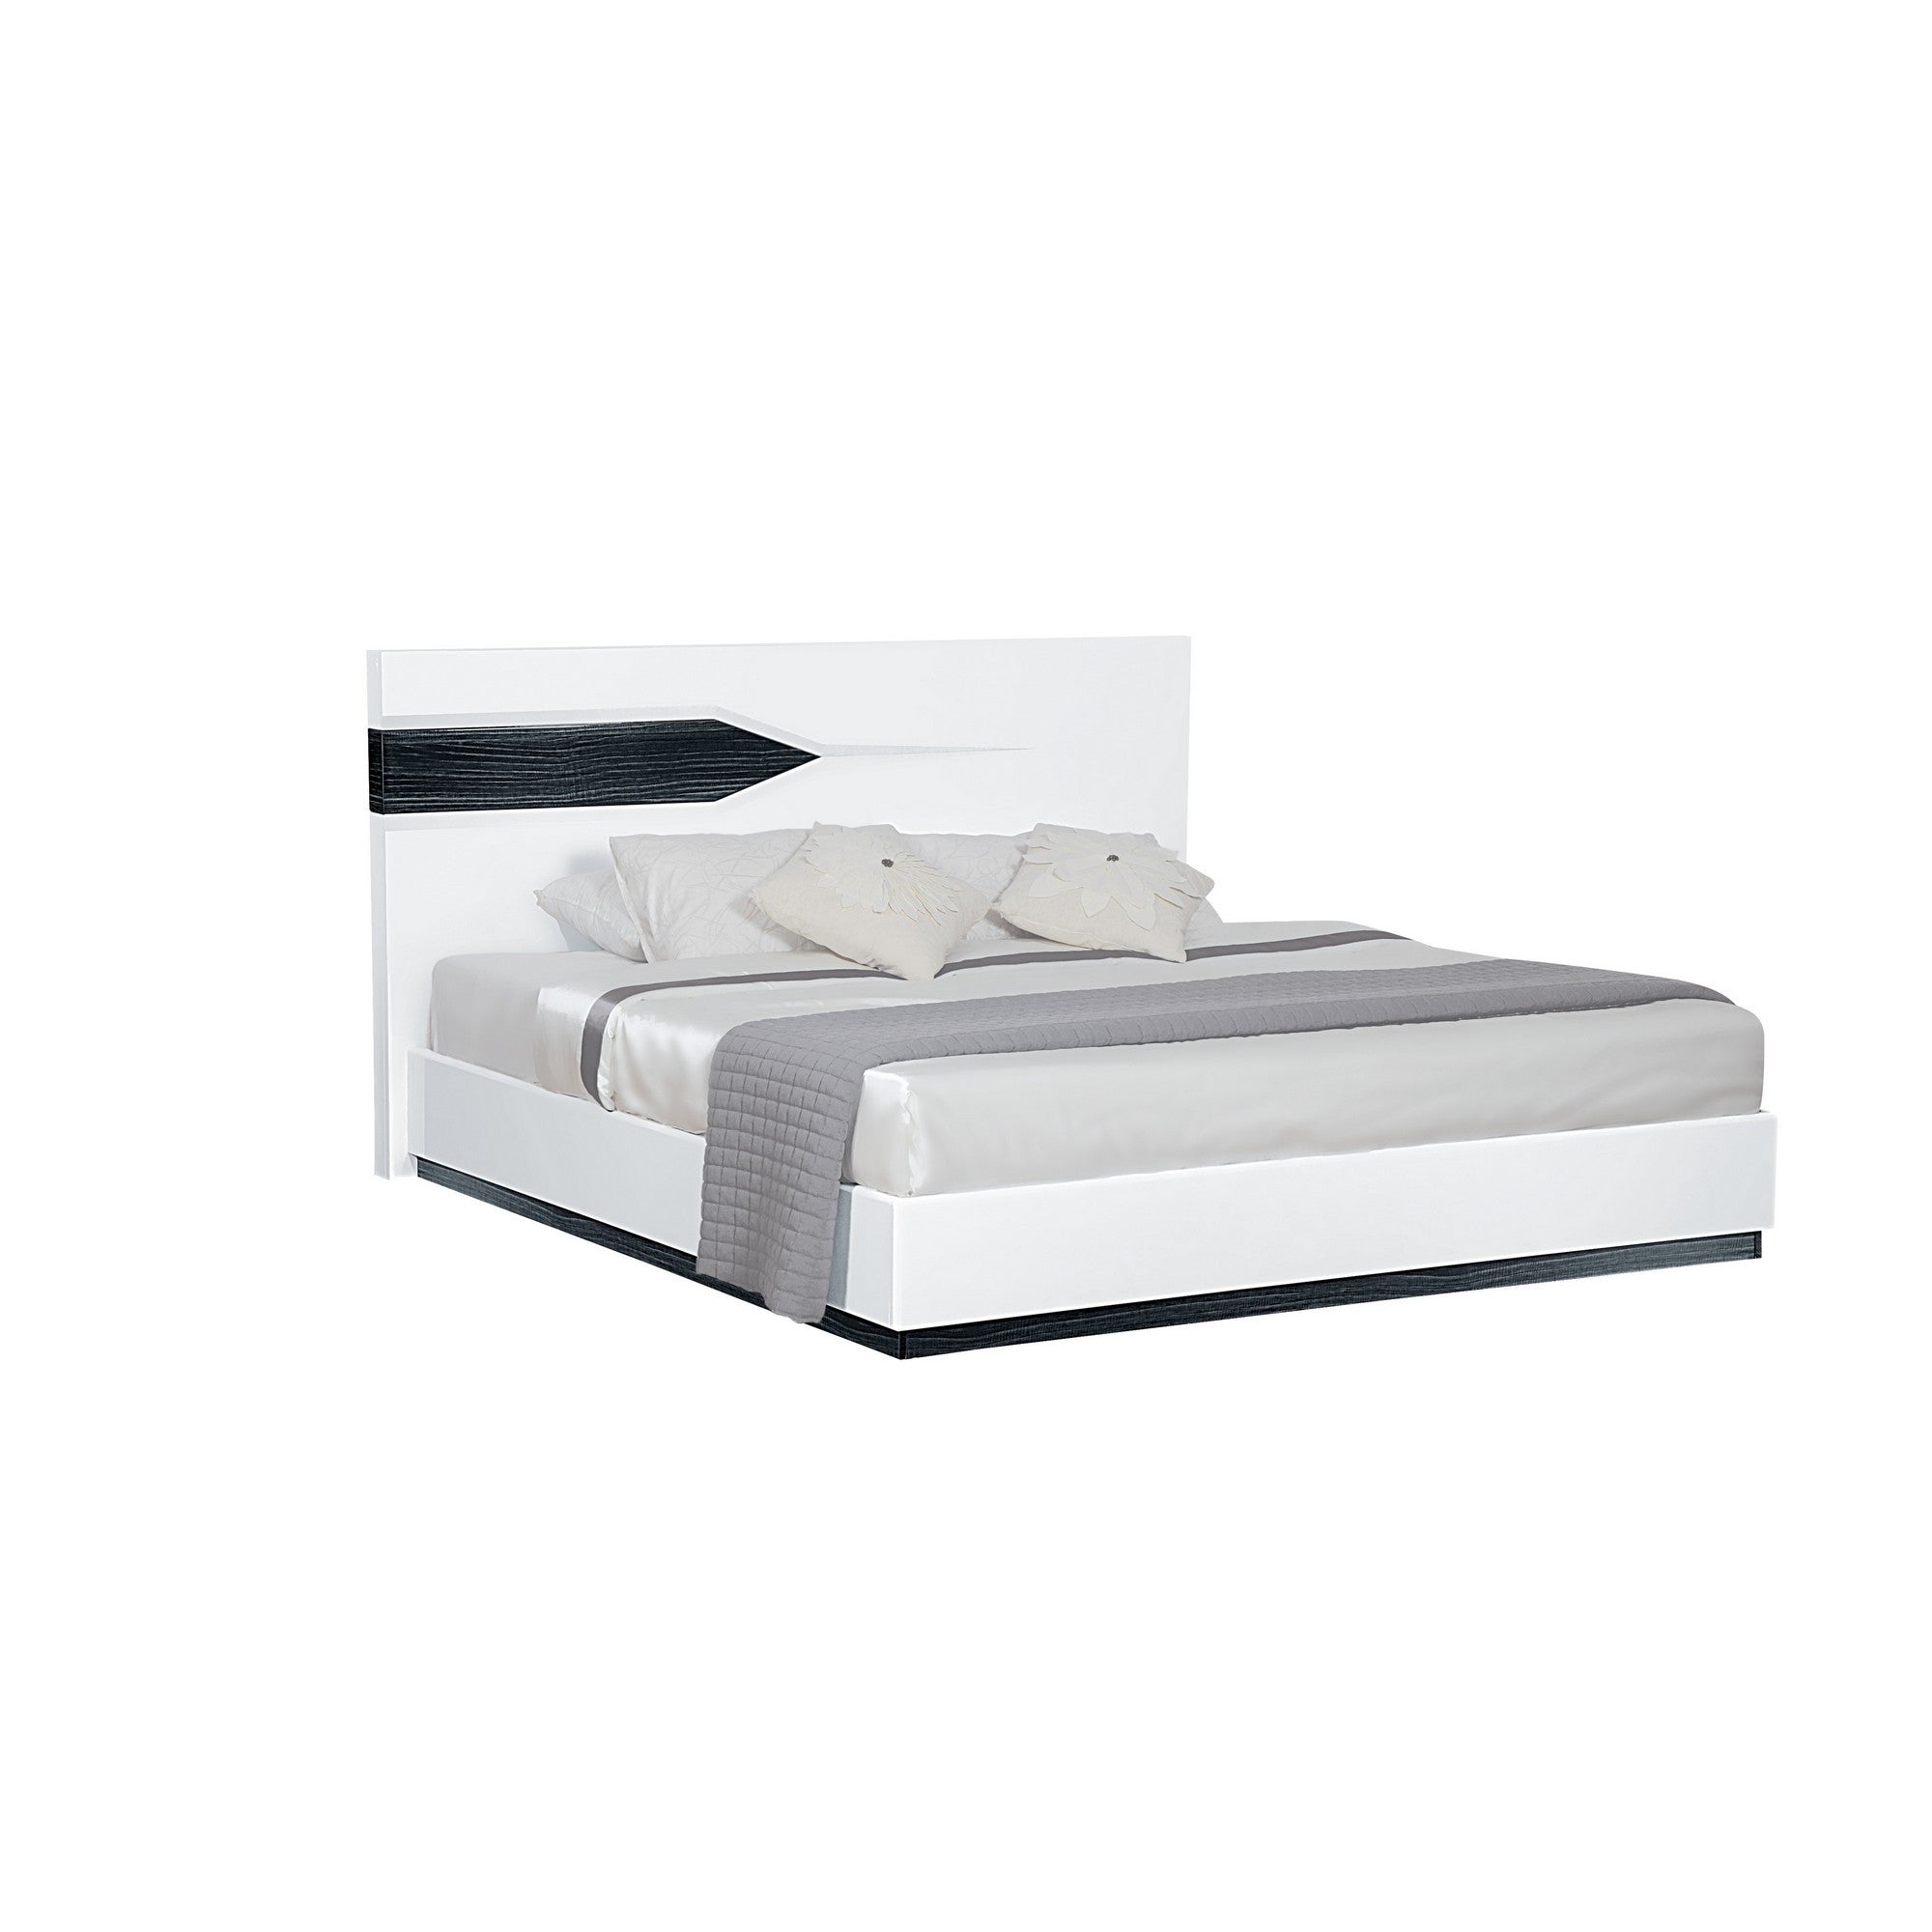 White Tone QueKingen Bed with Dark Grey Zebrano details On Headboard and Bottom Rail Accent Default Title